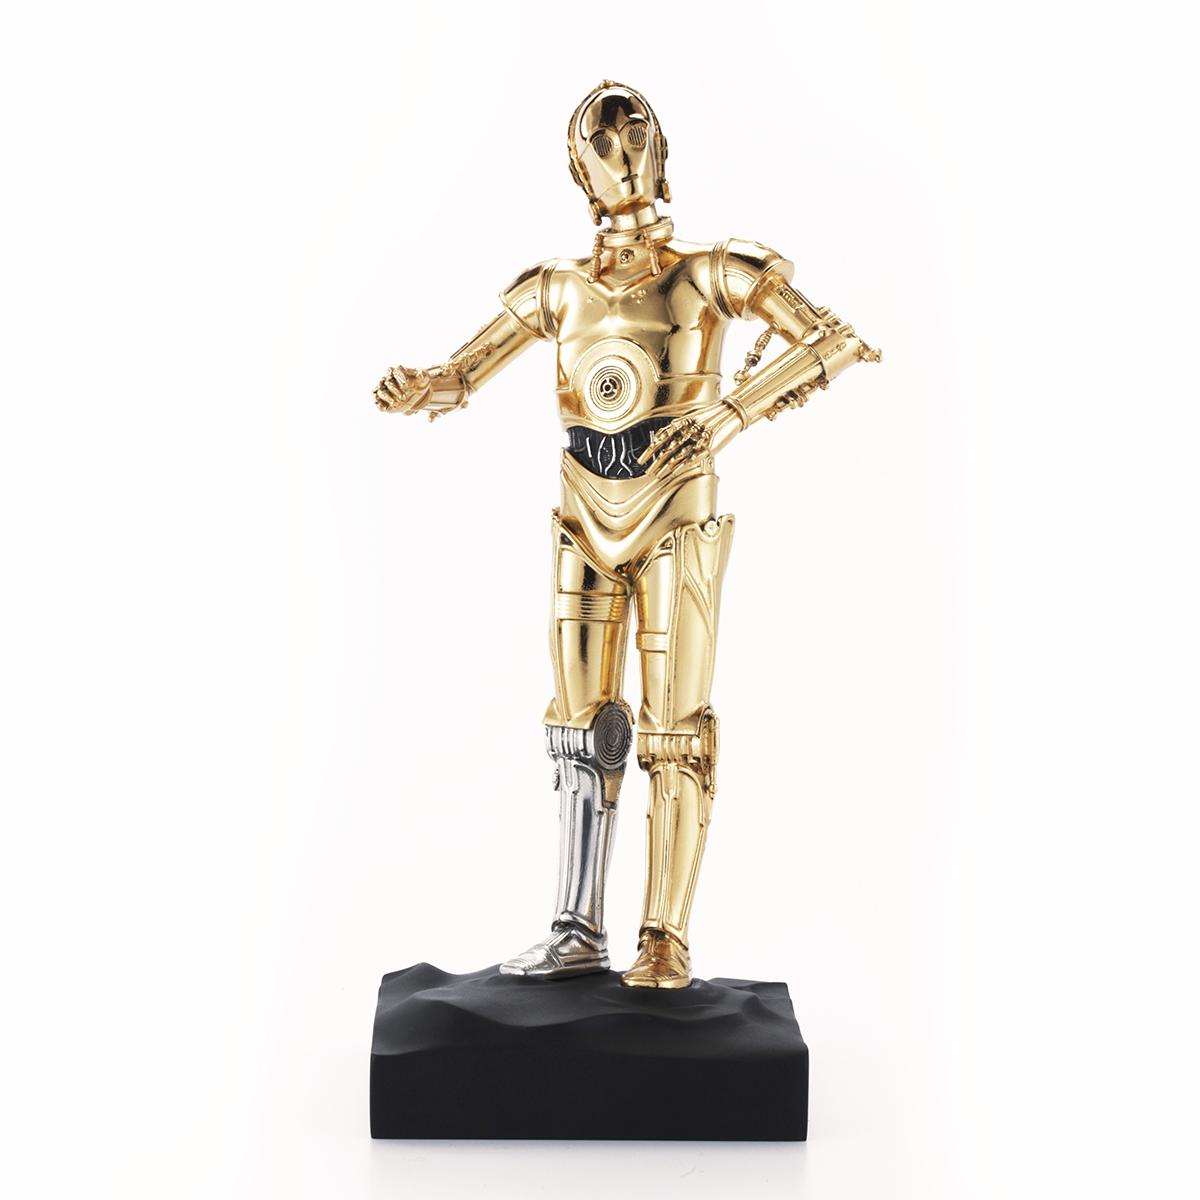 Limited Edition C-3PO Figurine